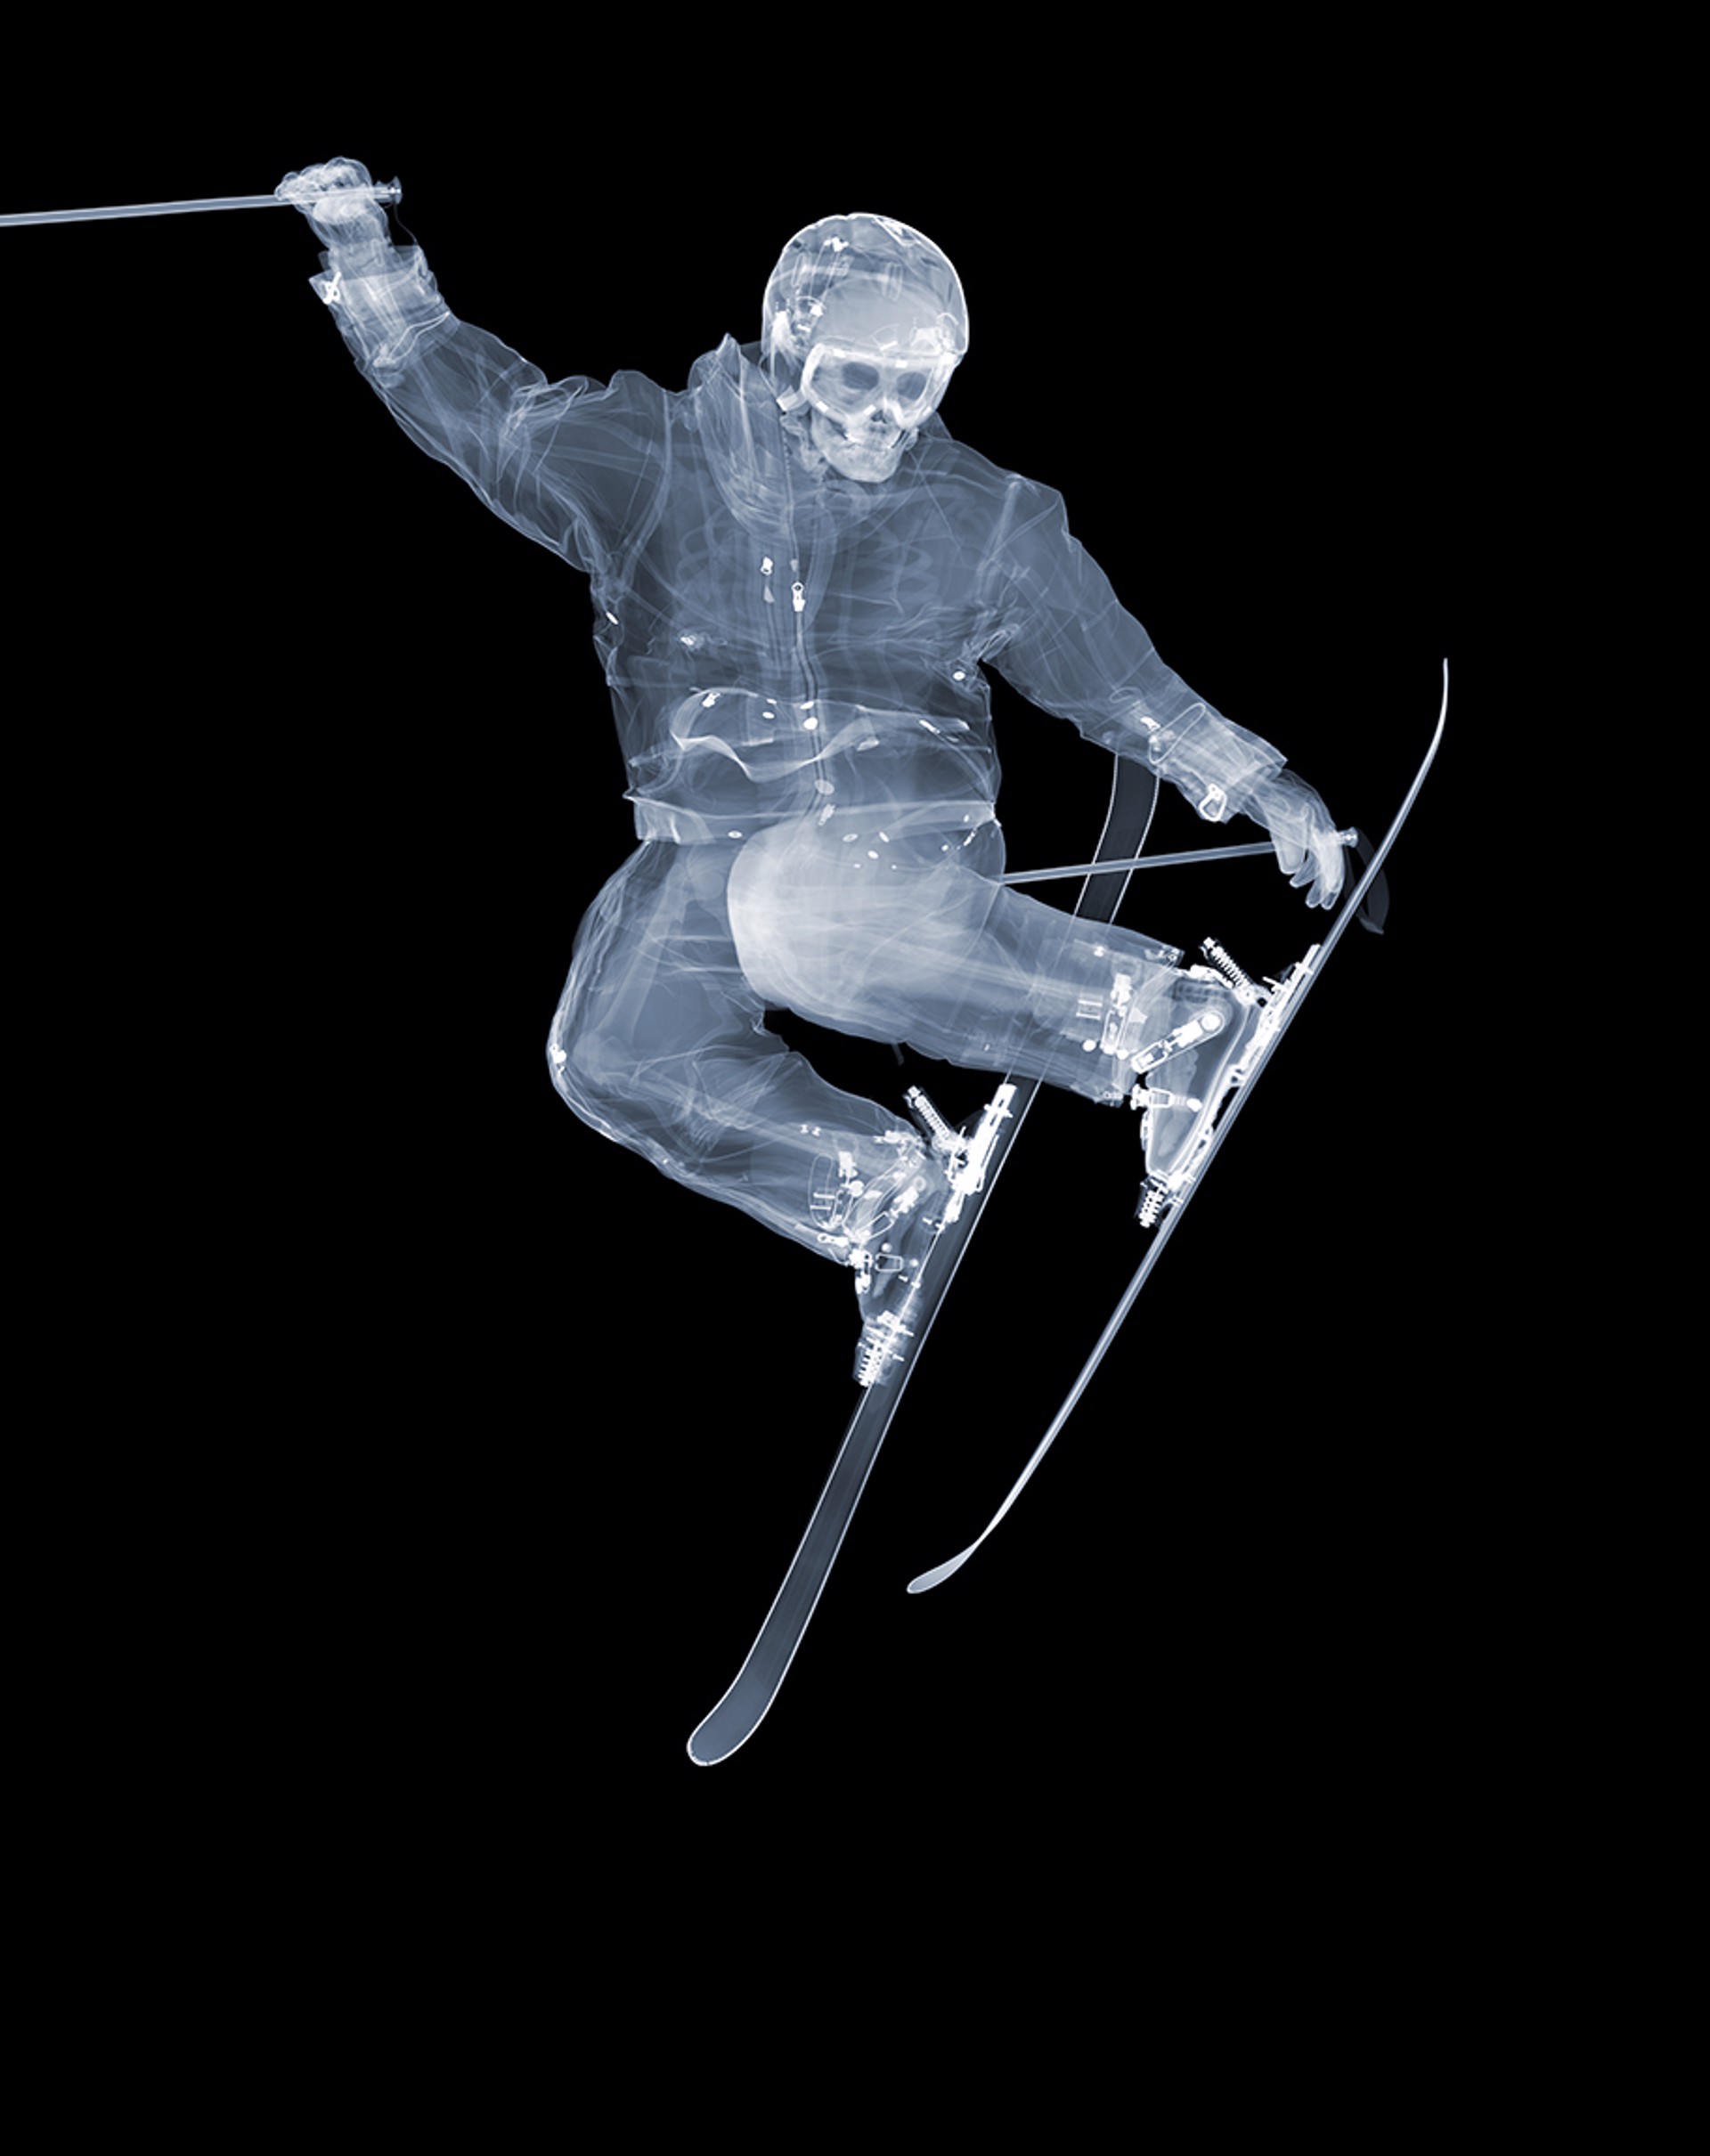 Skier by Nick Veasey